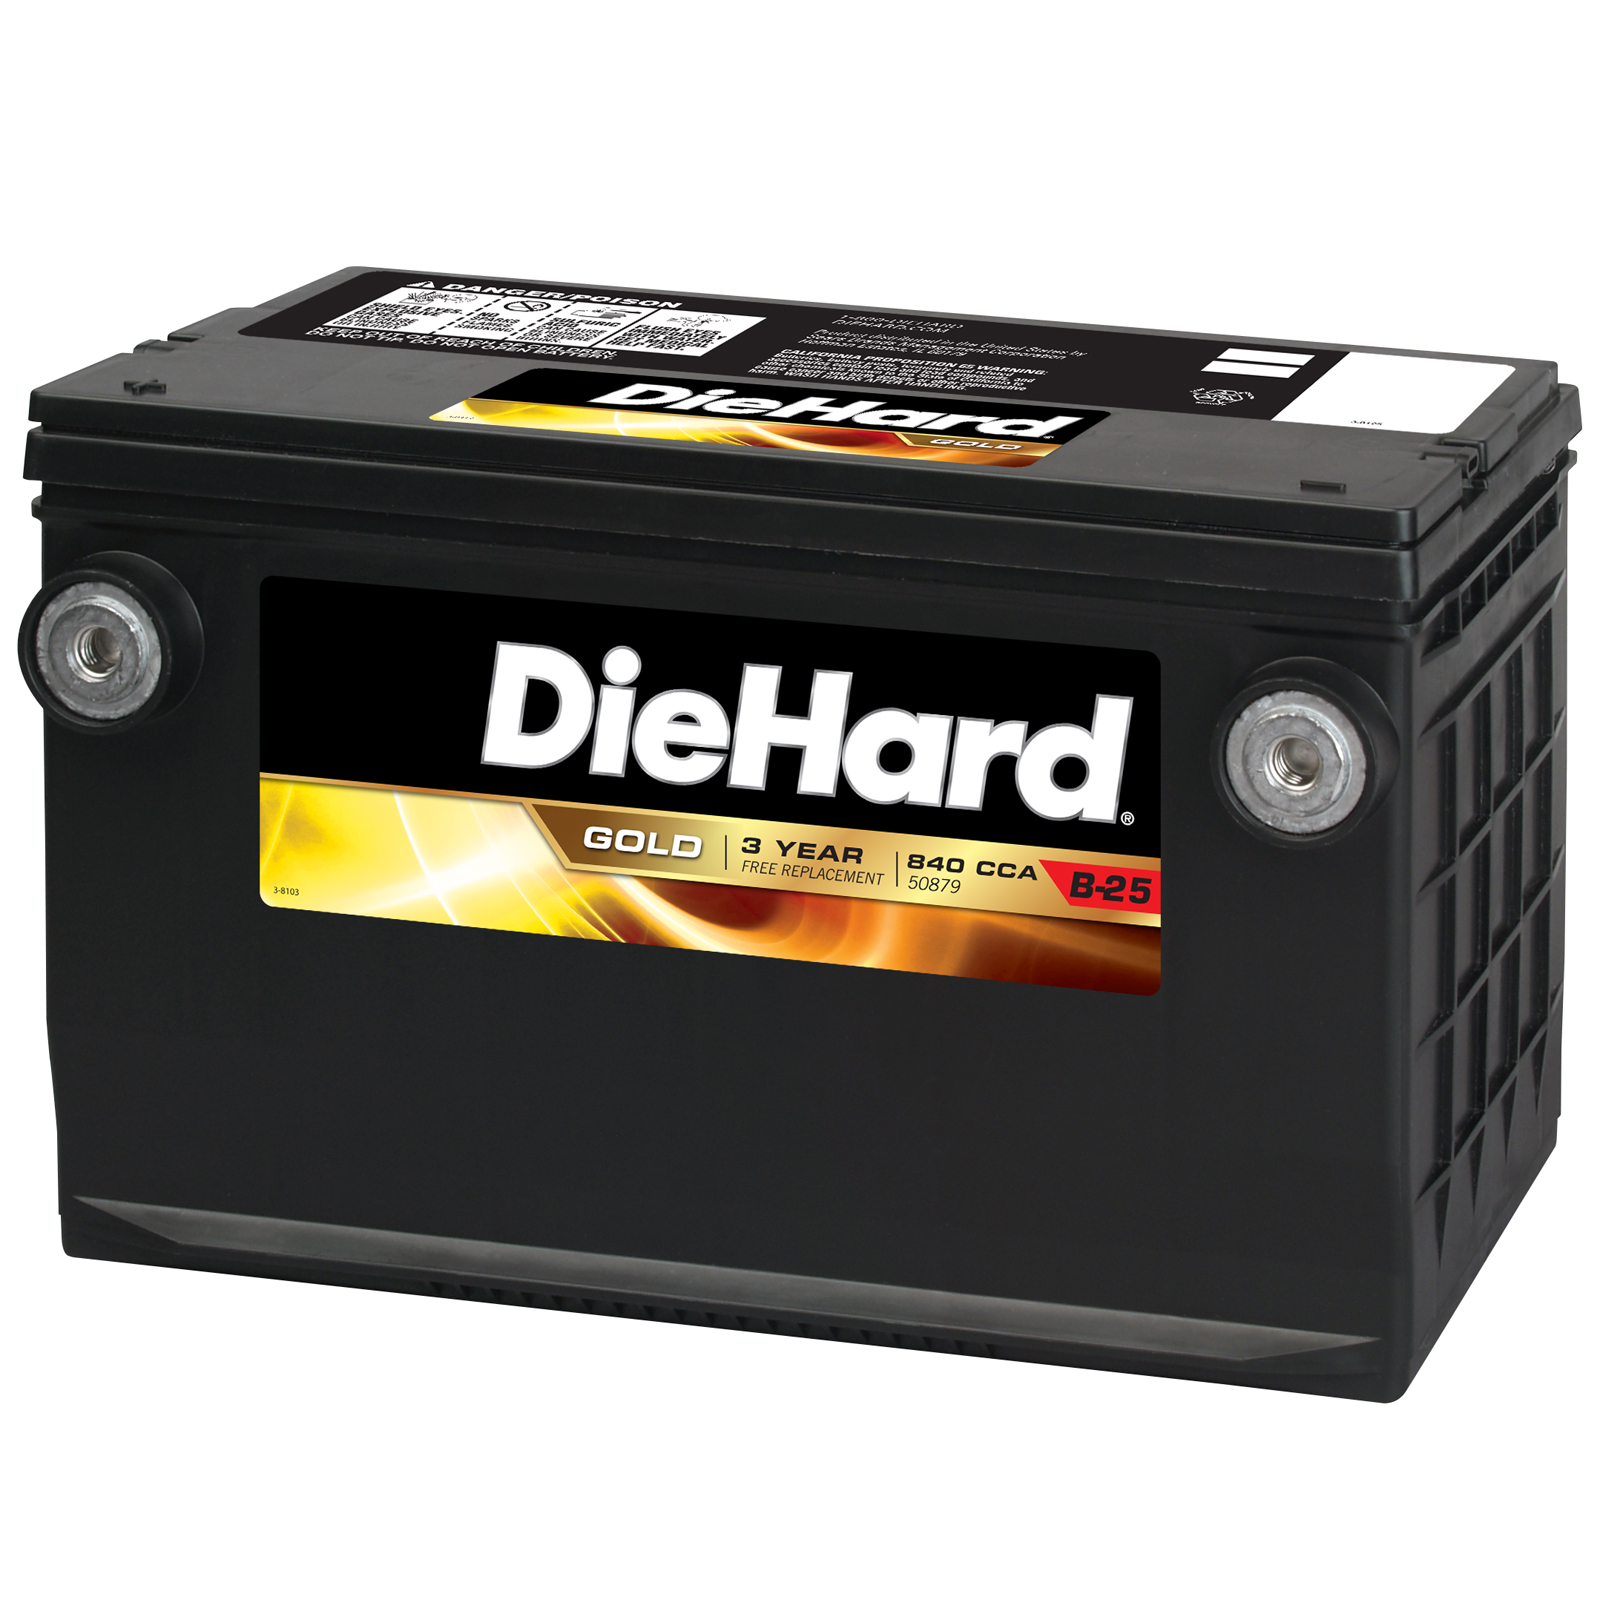 DieHard Gold Automotive Battery 50879 - Group Size EP-79